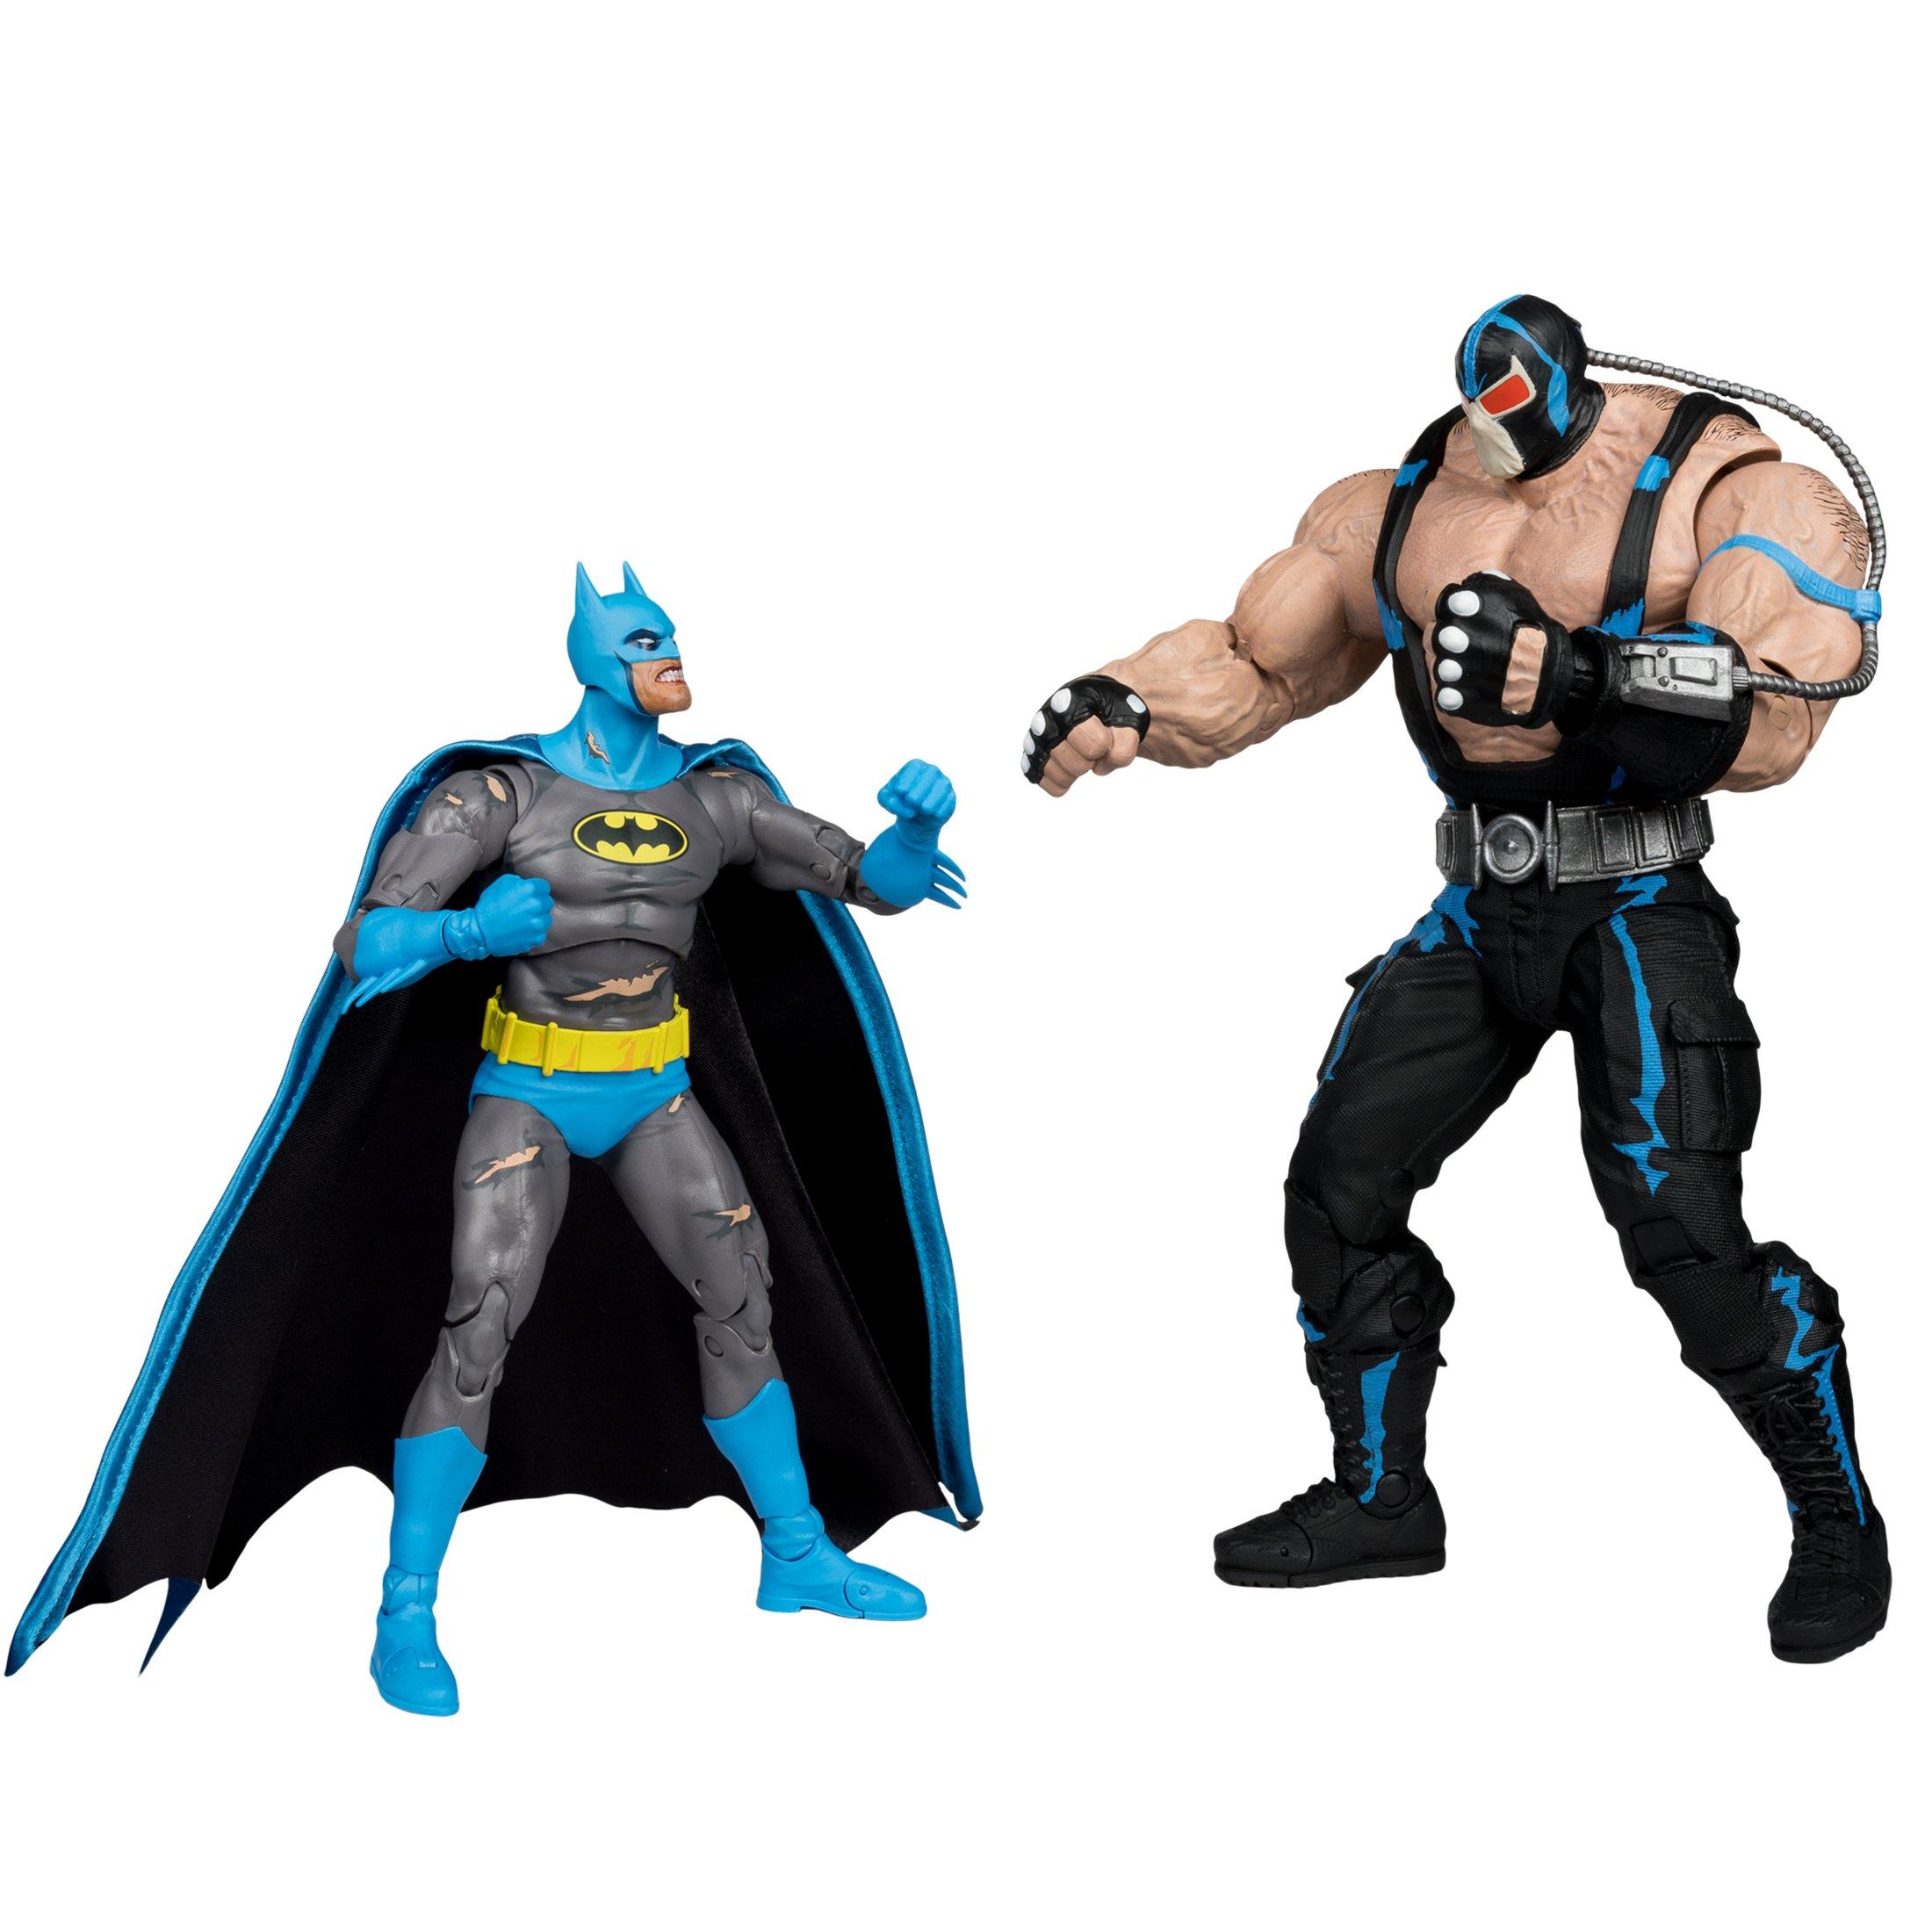 McFarlane Toys DC Multiverse Batman - Batman vs Bane (Knightfall) 7-in Action Figure Set